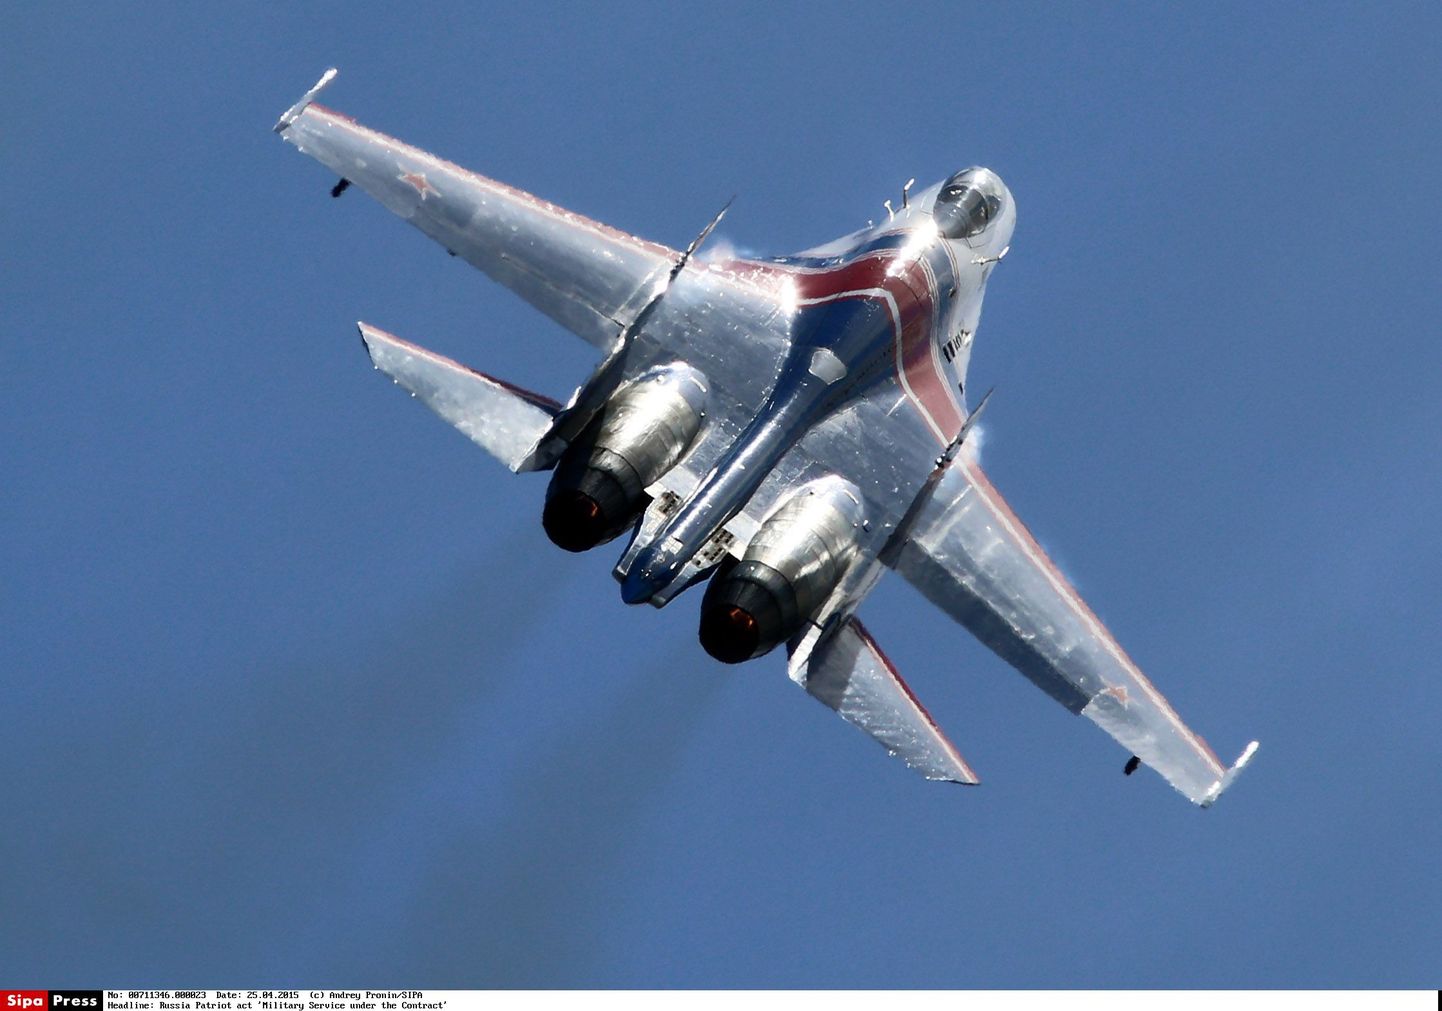 Vene sõjalennuk Su-27